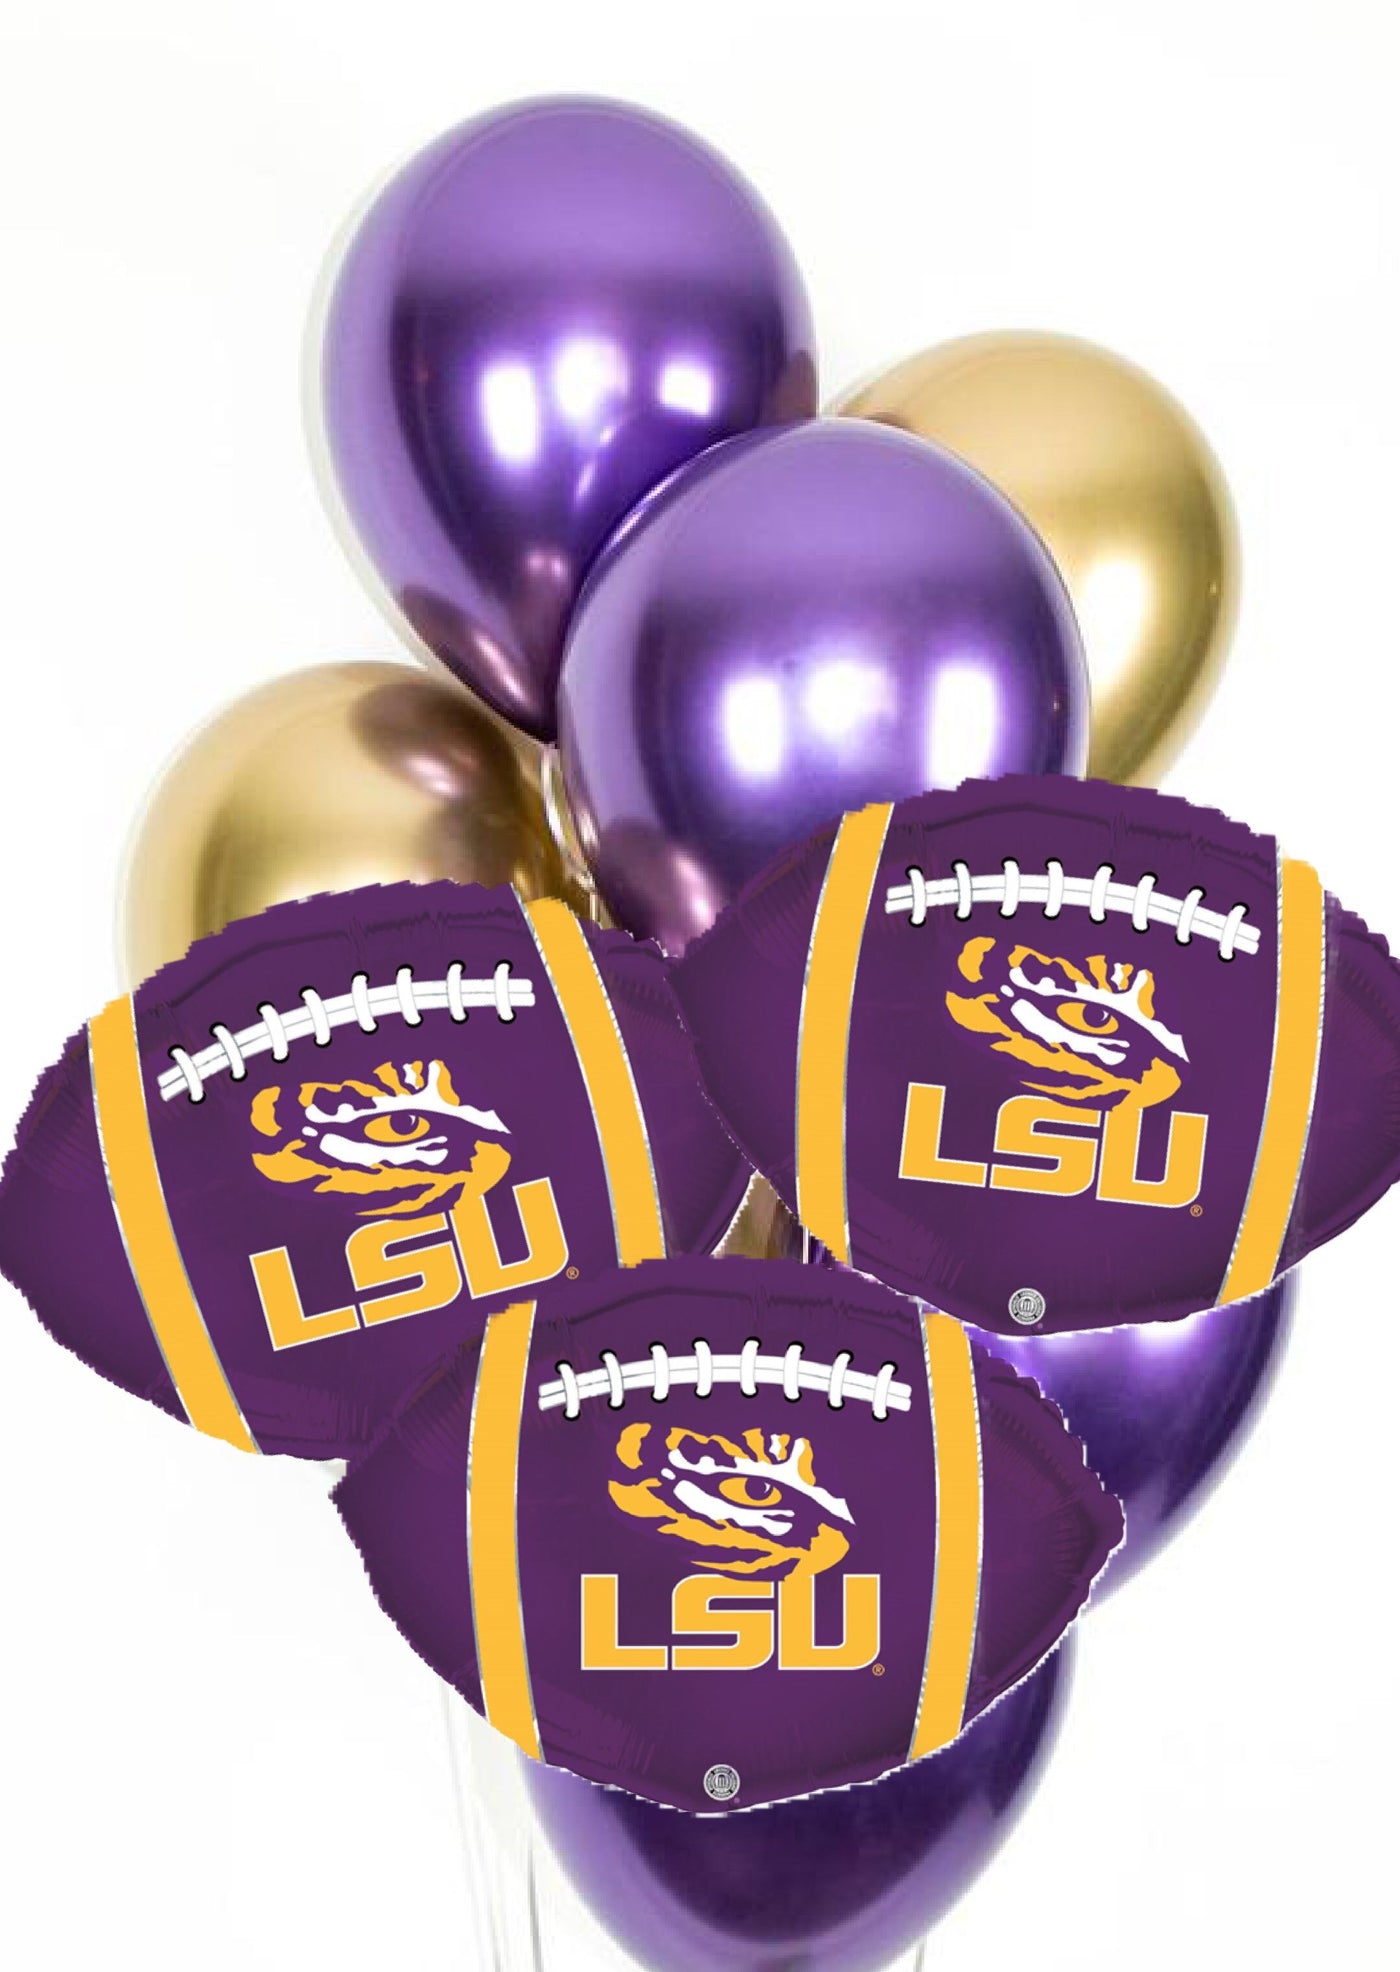 LSU Football Balloons. Football Shaped Balloon